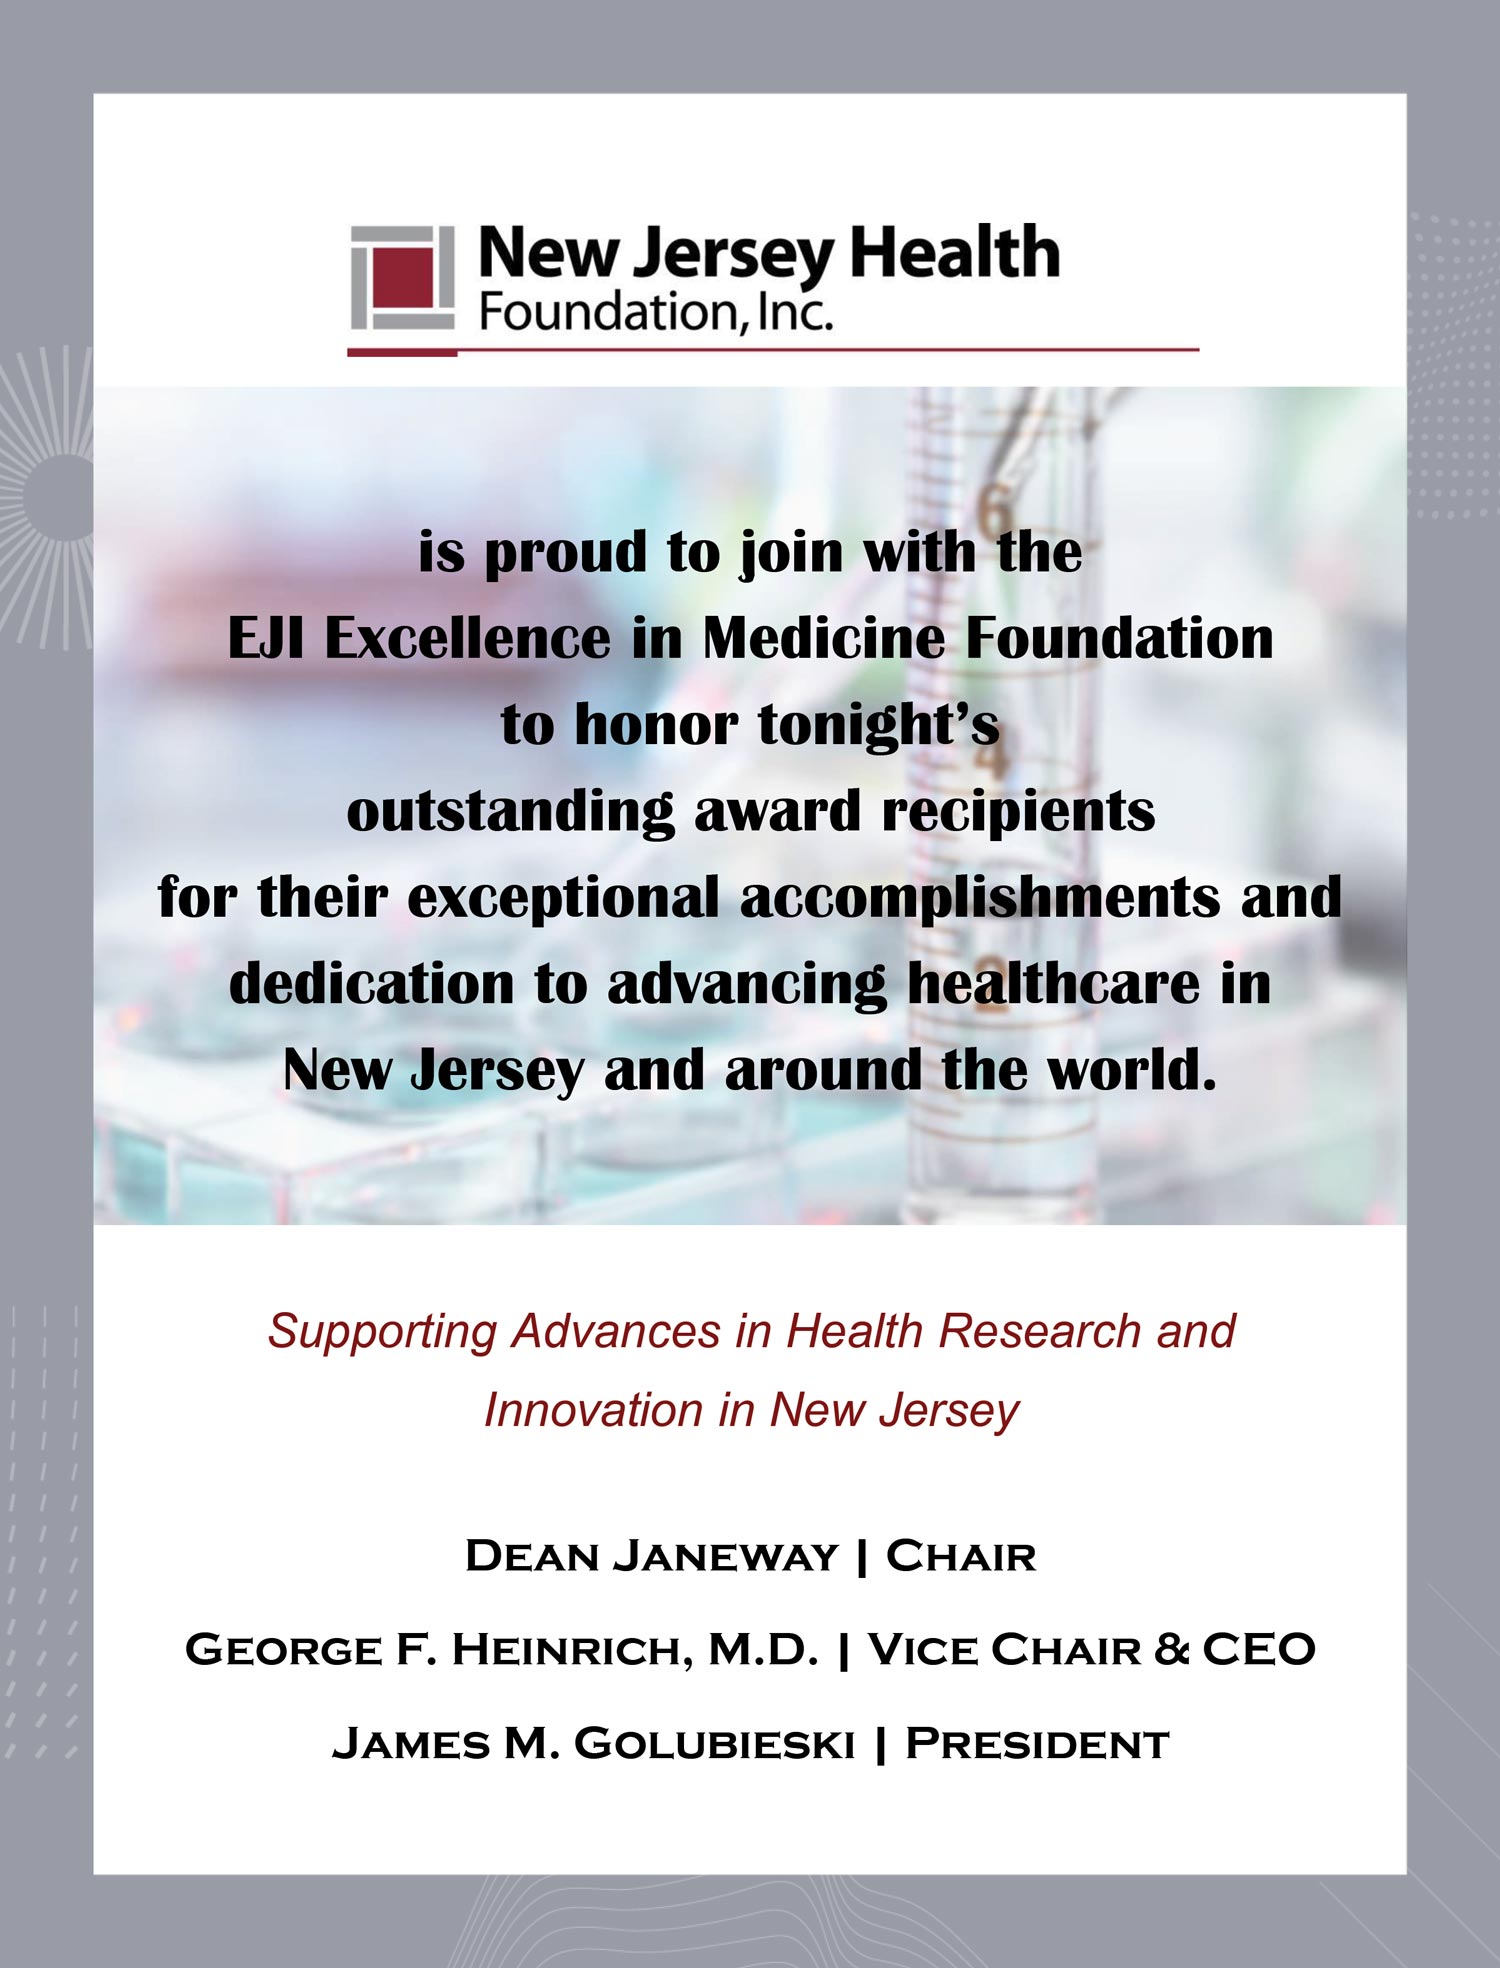 New Jersey Health Foundation, Inc. advertisement